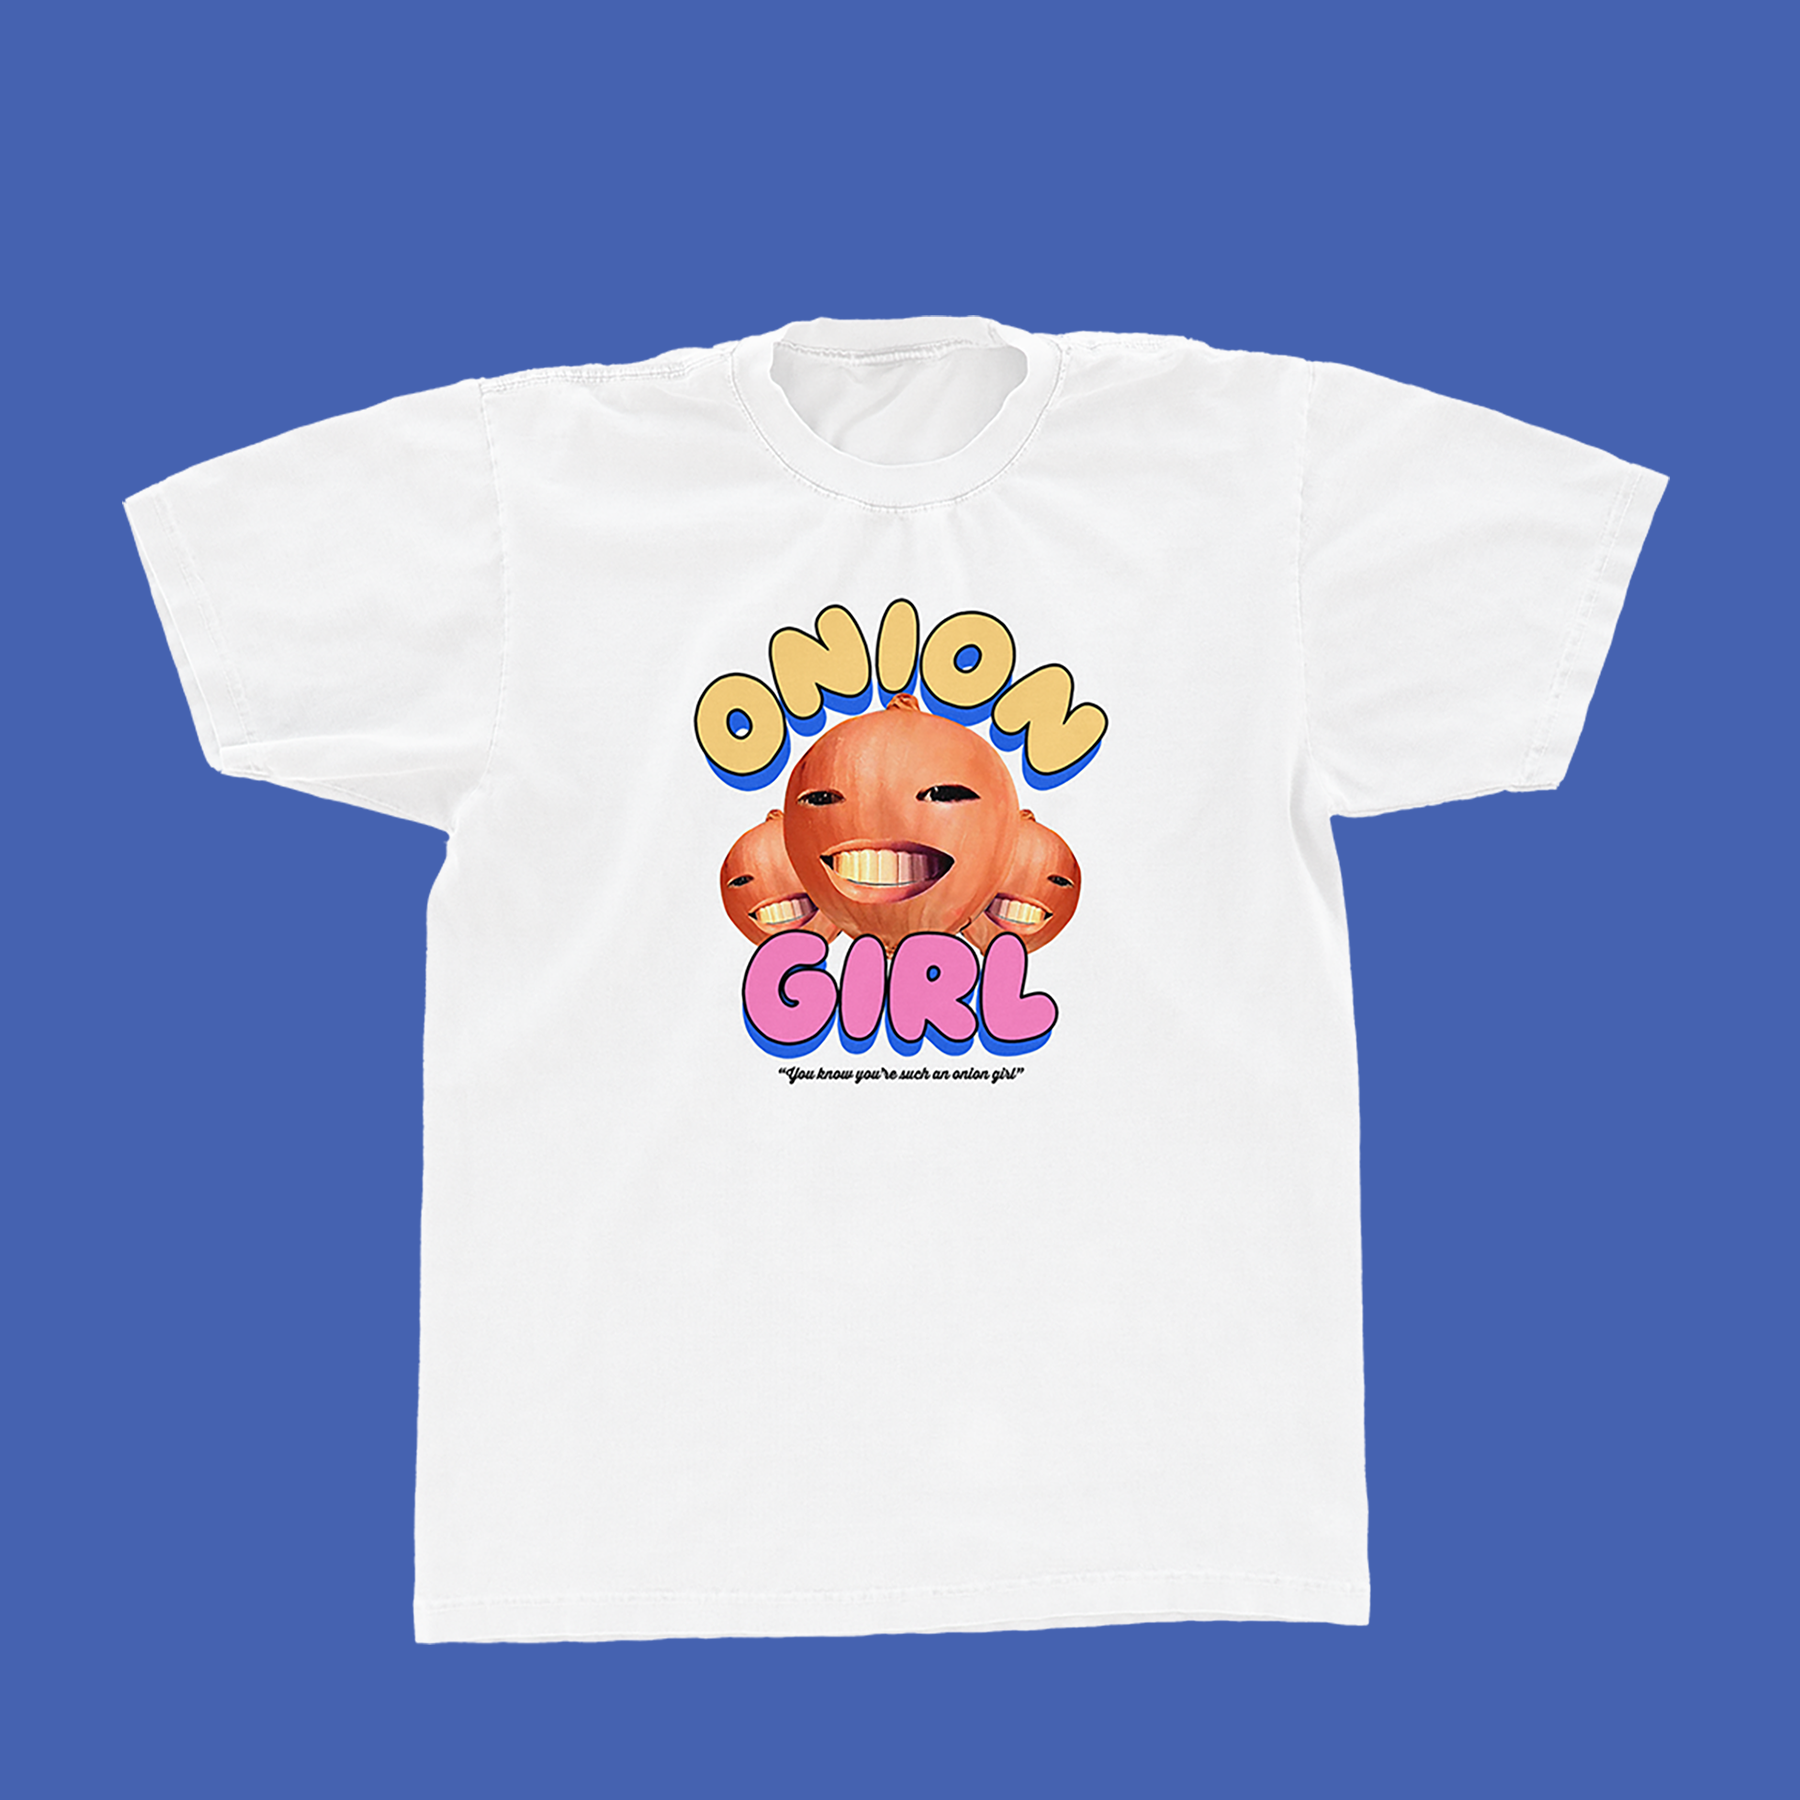 Jacob Collier - Onion Girl T-shirt